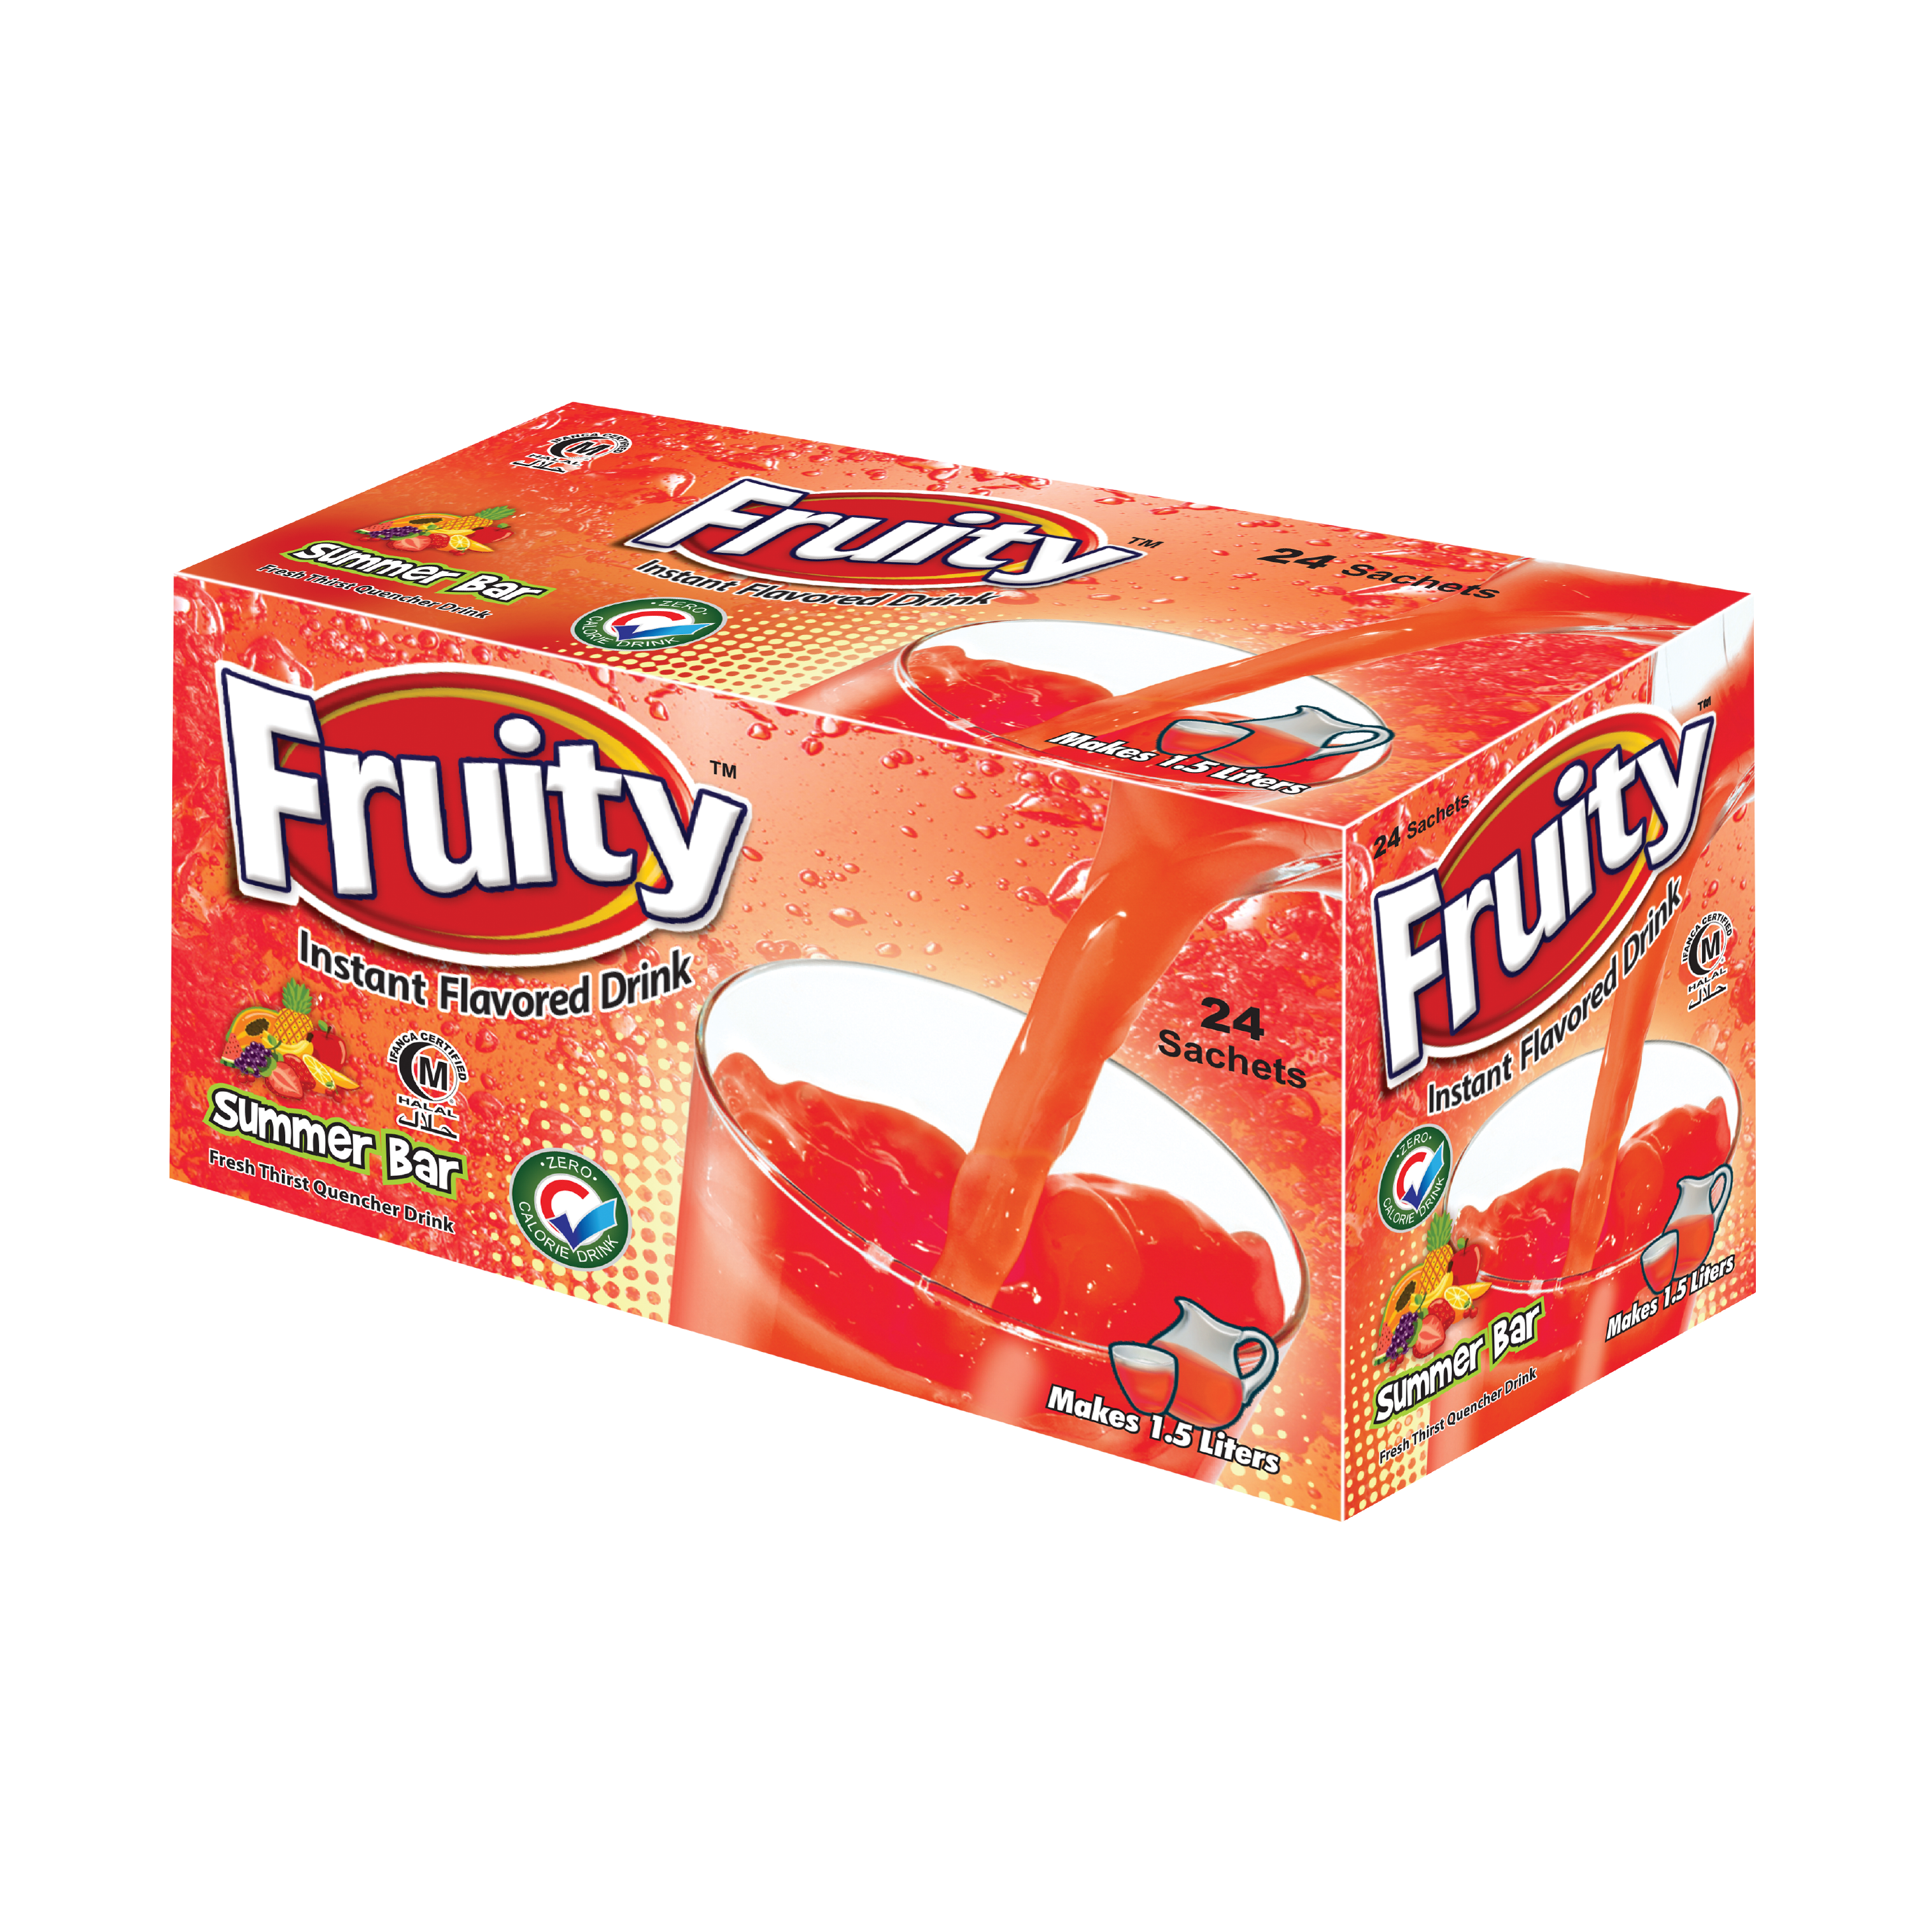 Fruity Instant Drink Summer Bar. Box